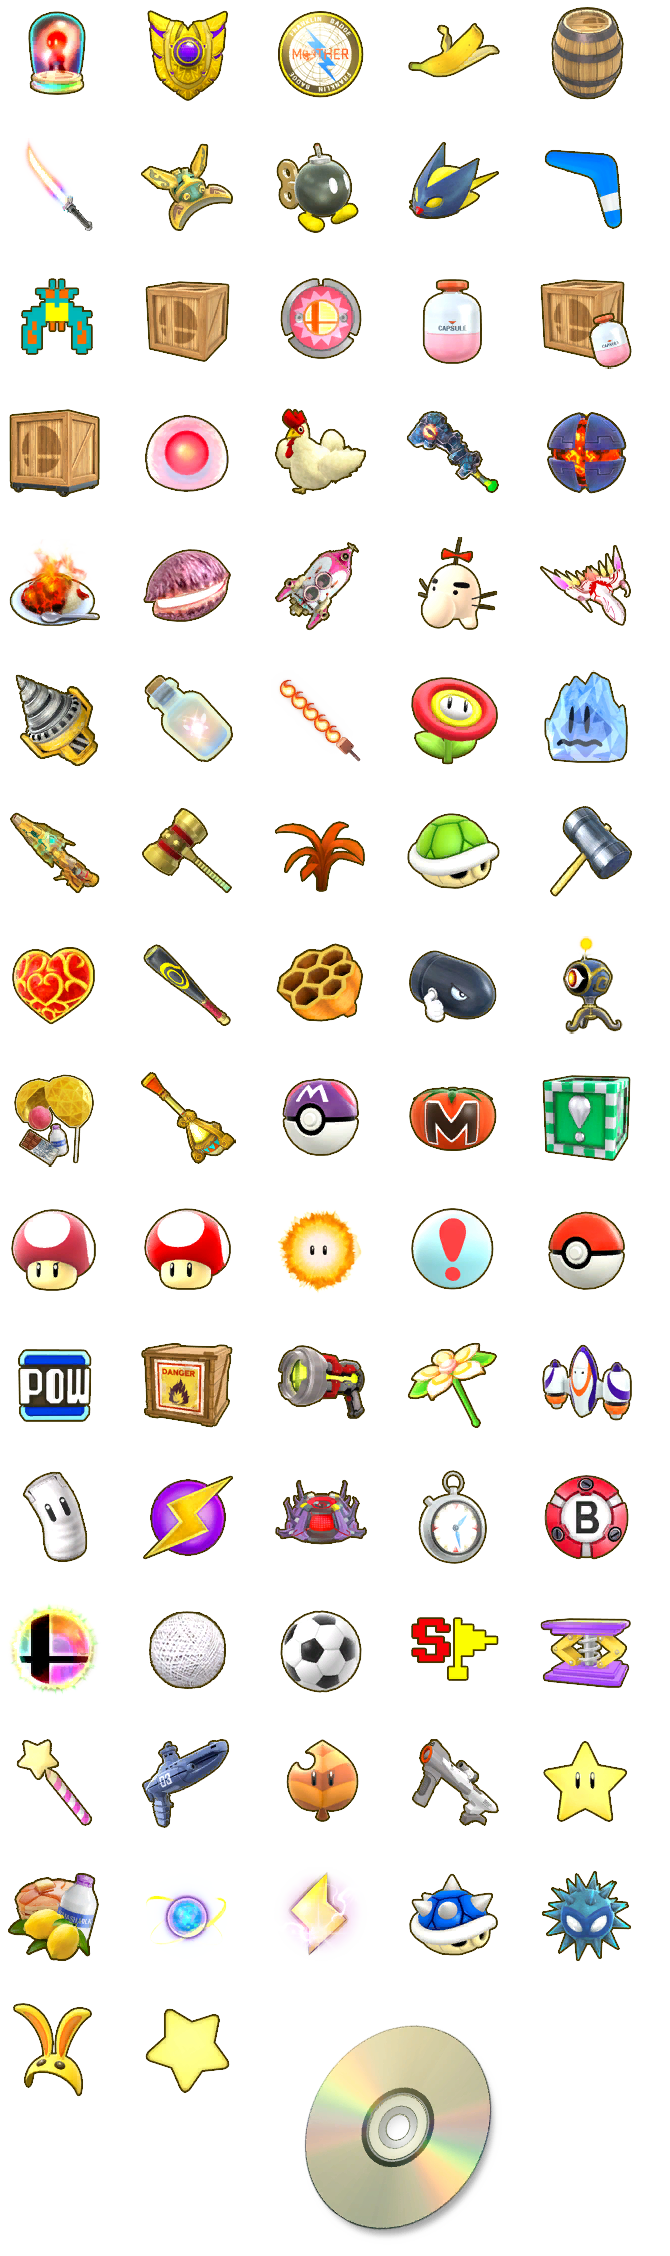 Super Smash Bros. for Wii U - Item Icons